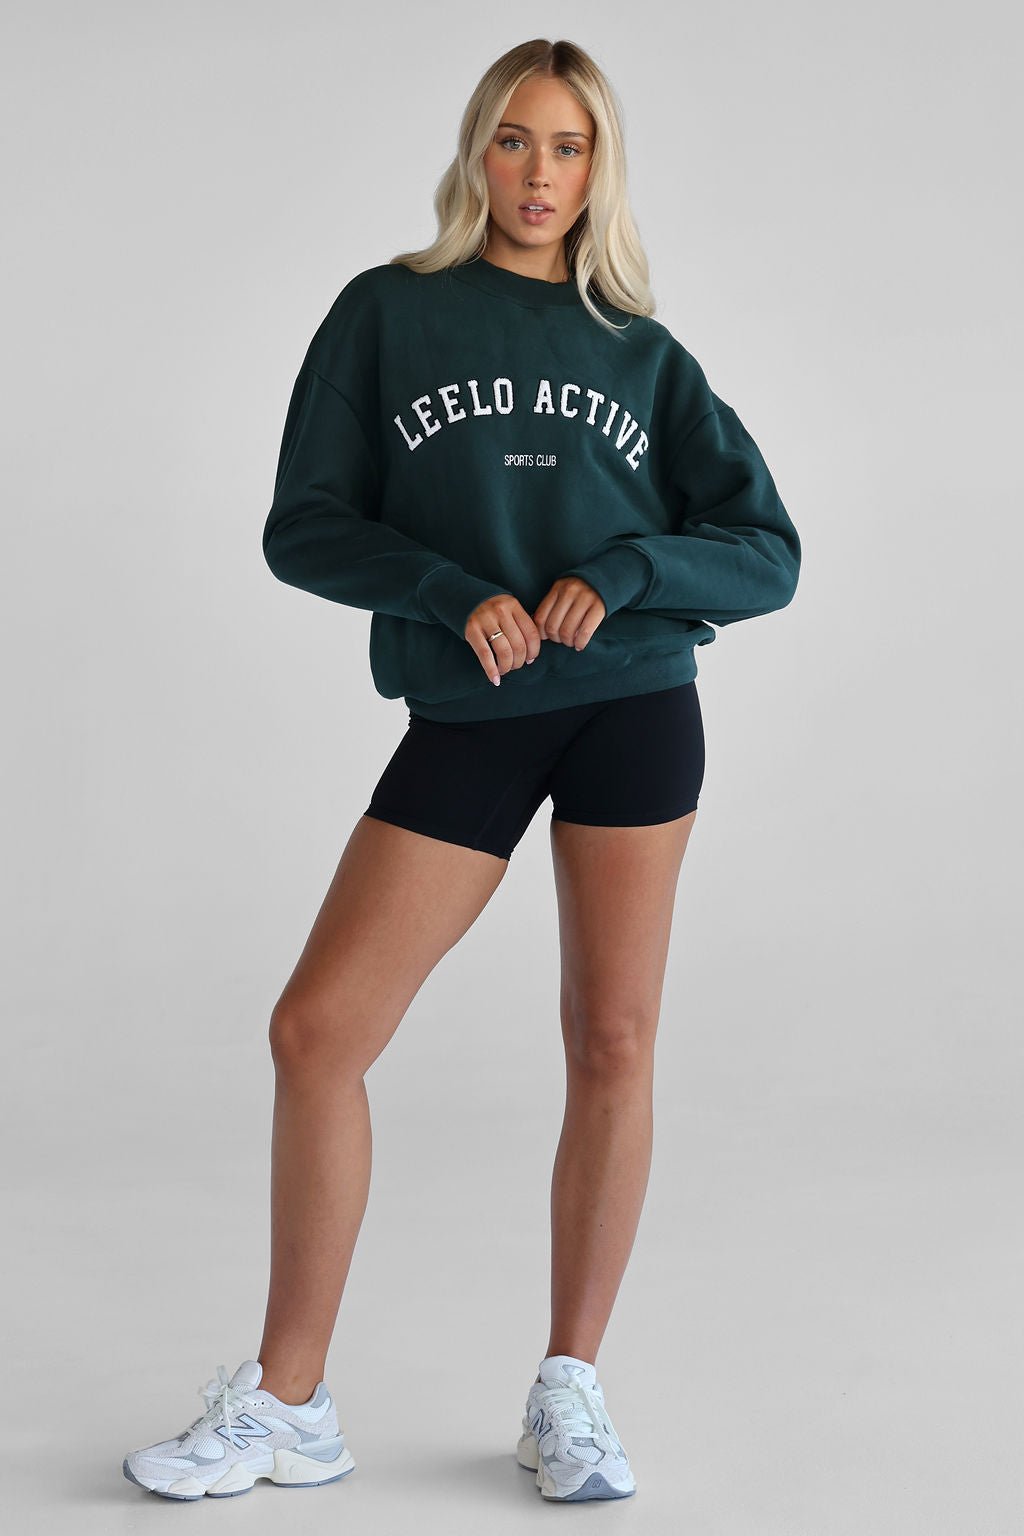 Sports Club Sweater - Boston Green - LEELO ACTIVE